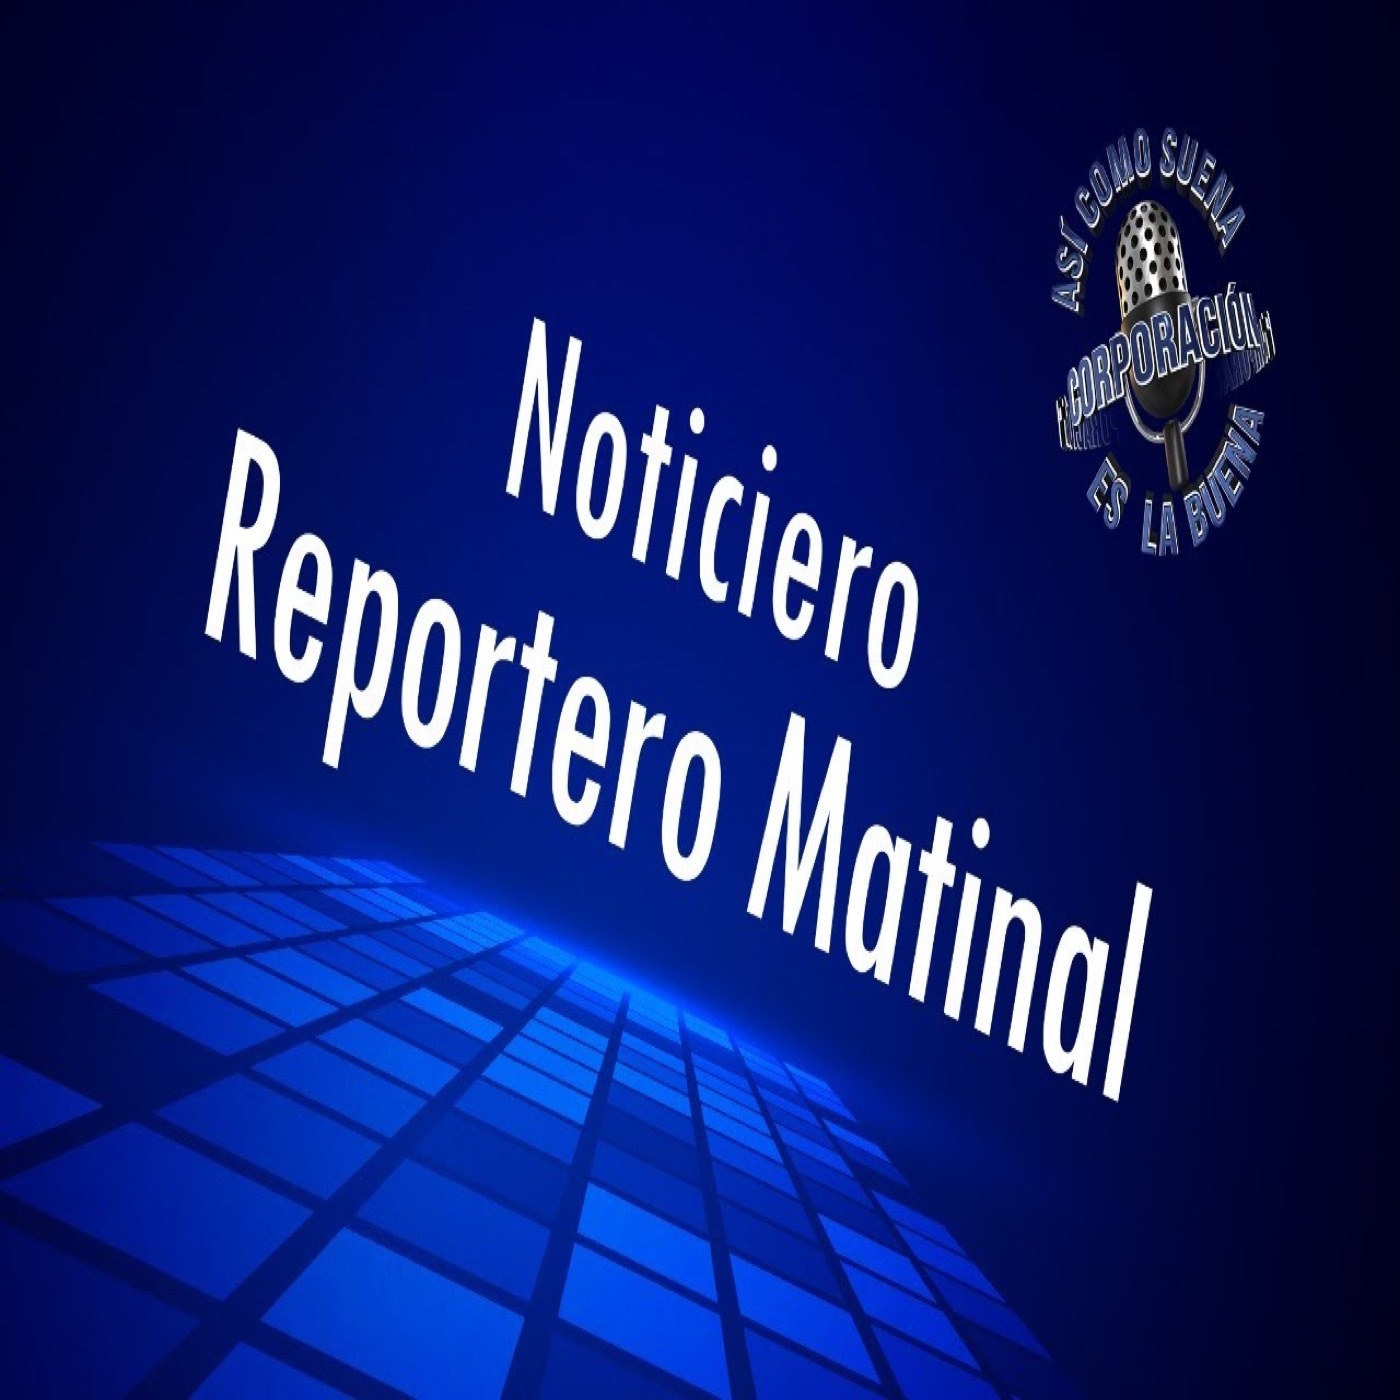 Noticiero Reportero Matinal - Monday, November 28, 2022